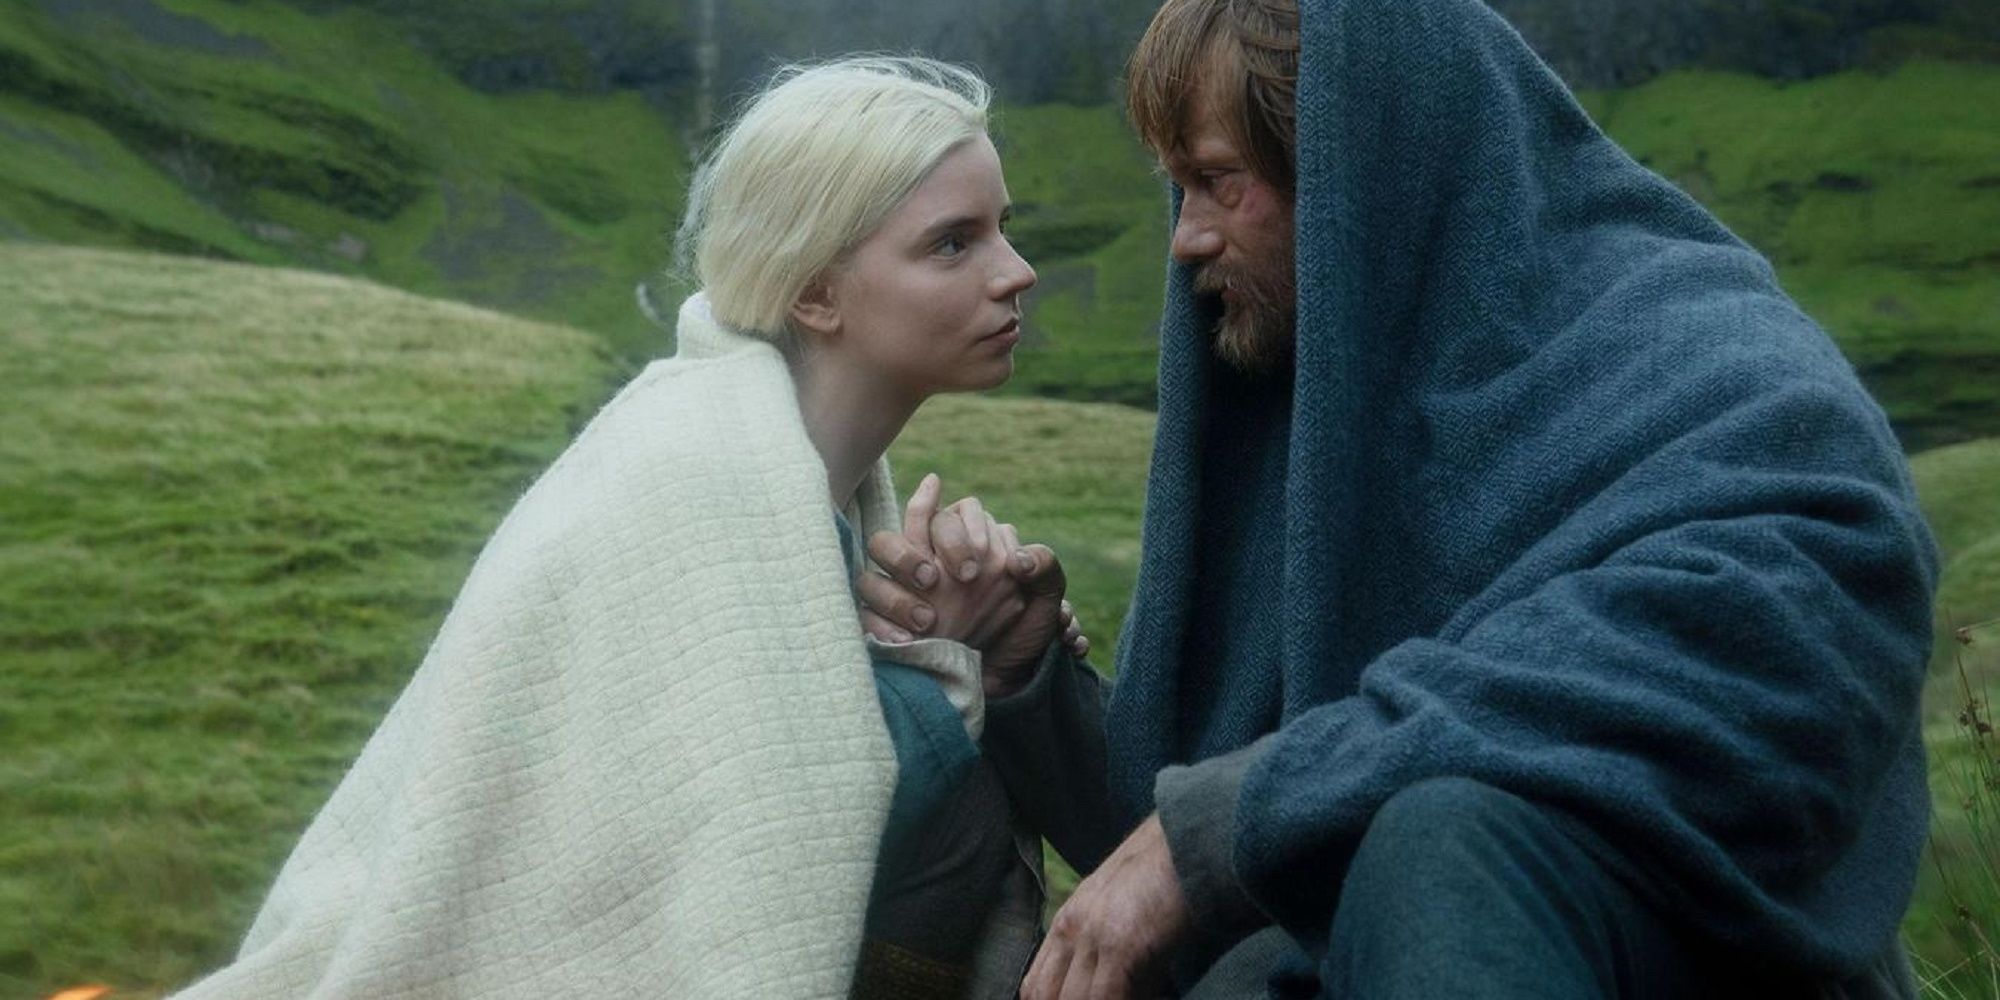 Anya Taylor-Joy as Olga and Alexander Skarsgard as Amleth stare into each other's eyes lovingly in The Northman